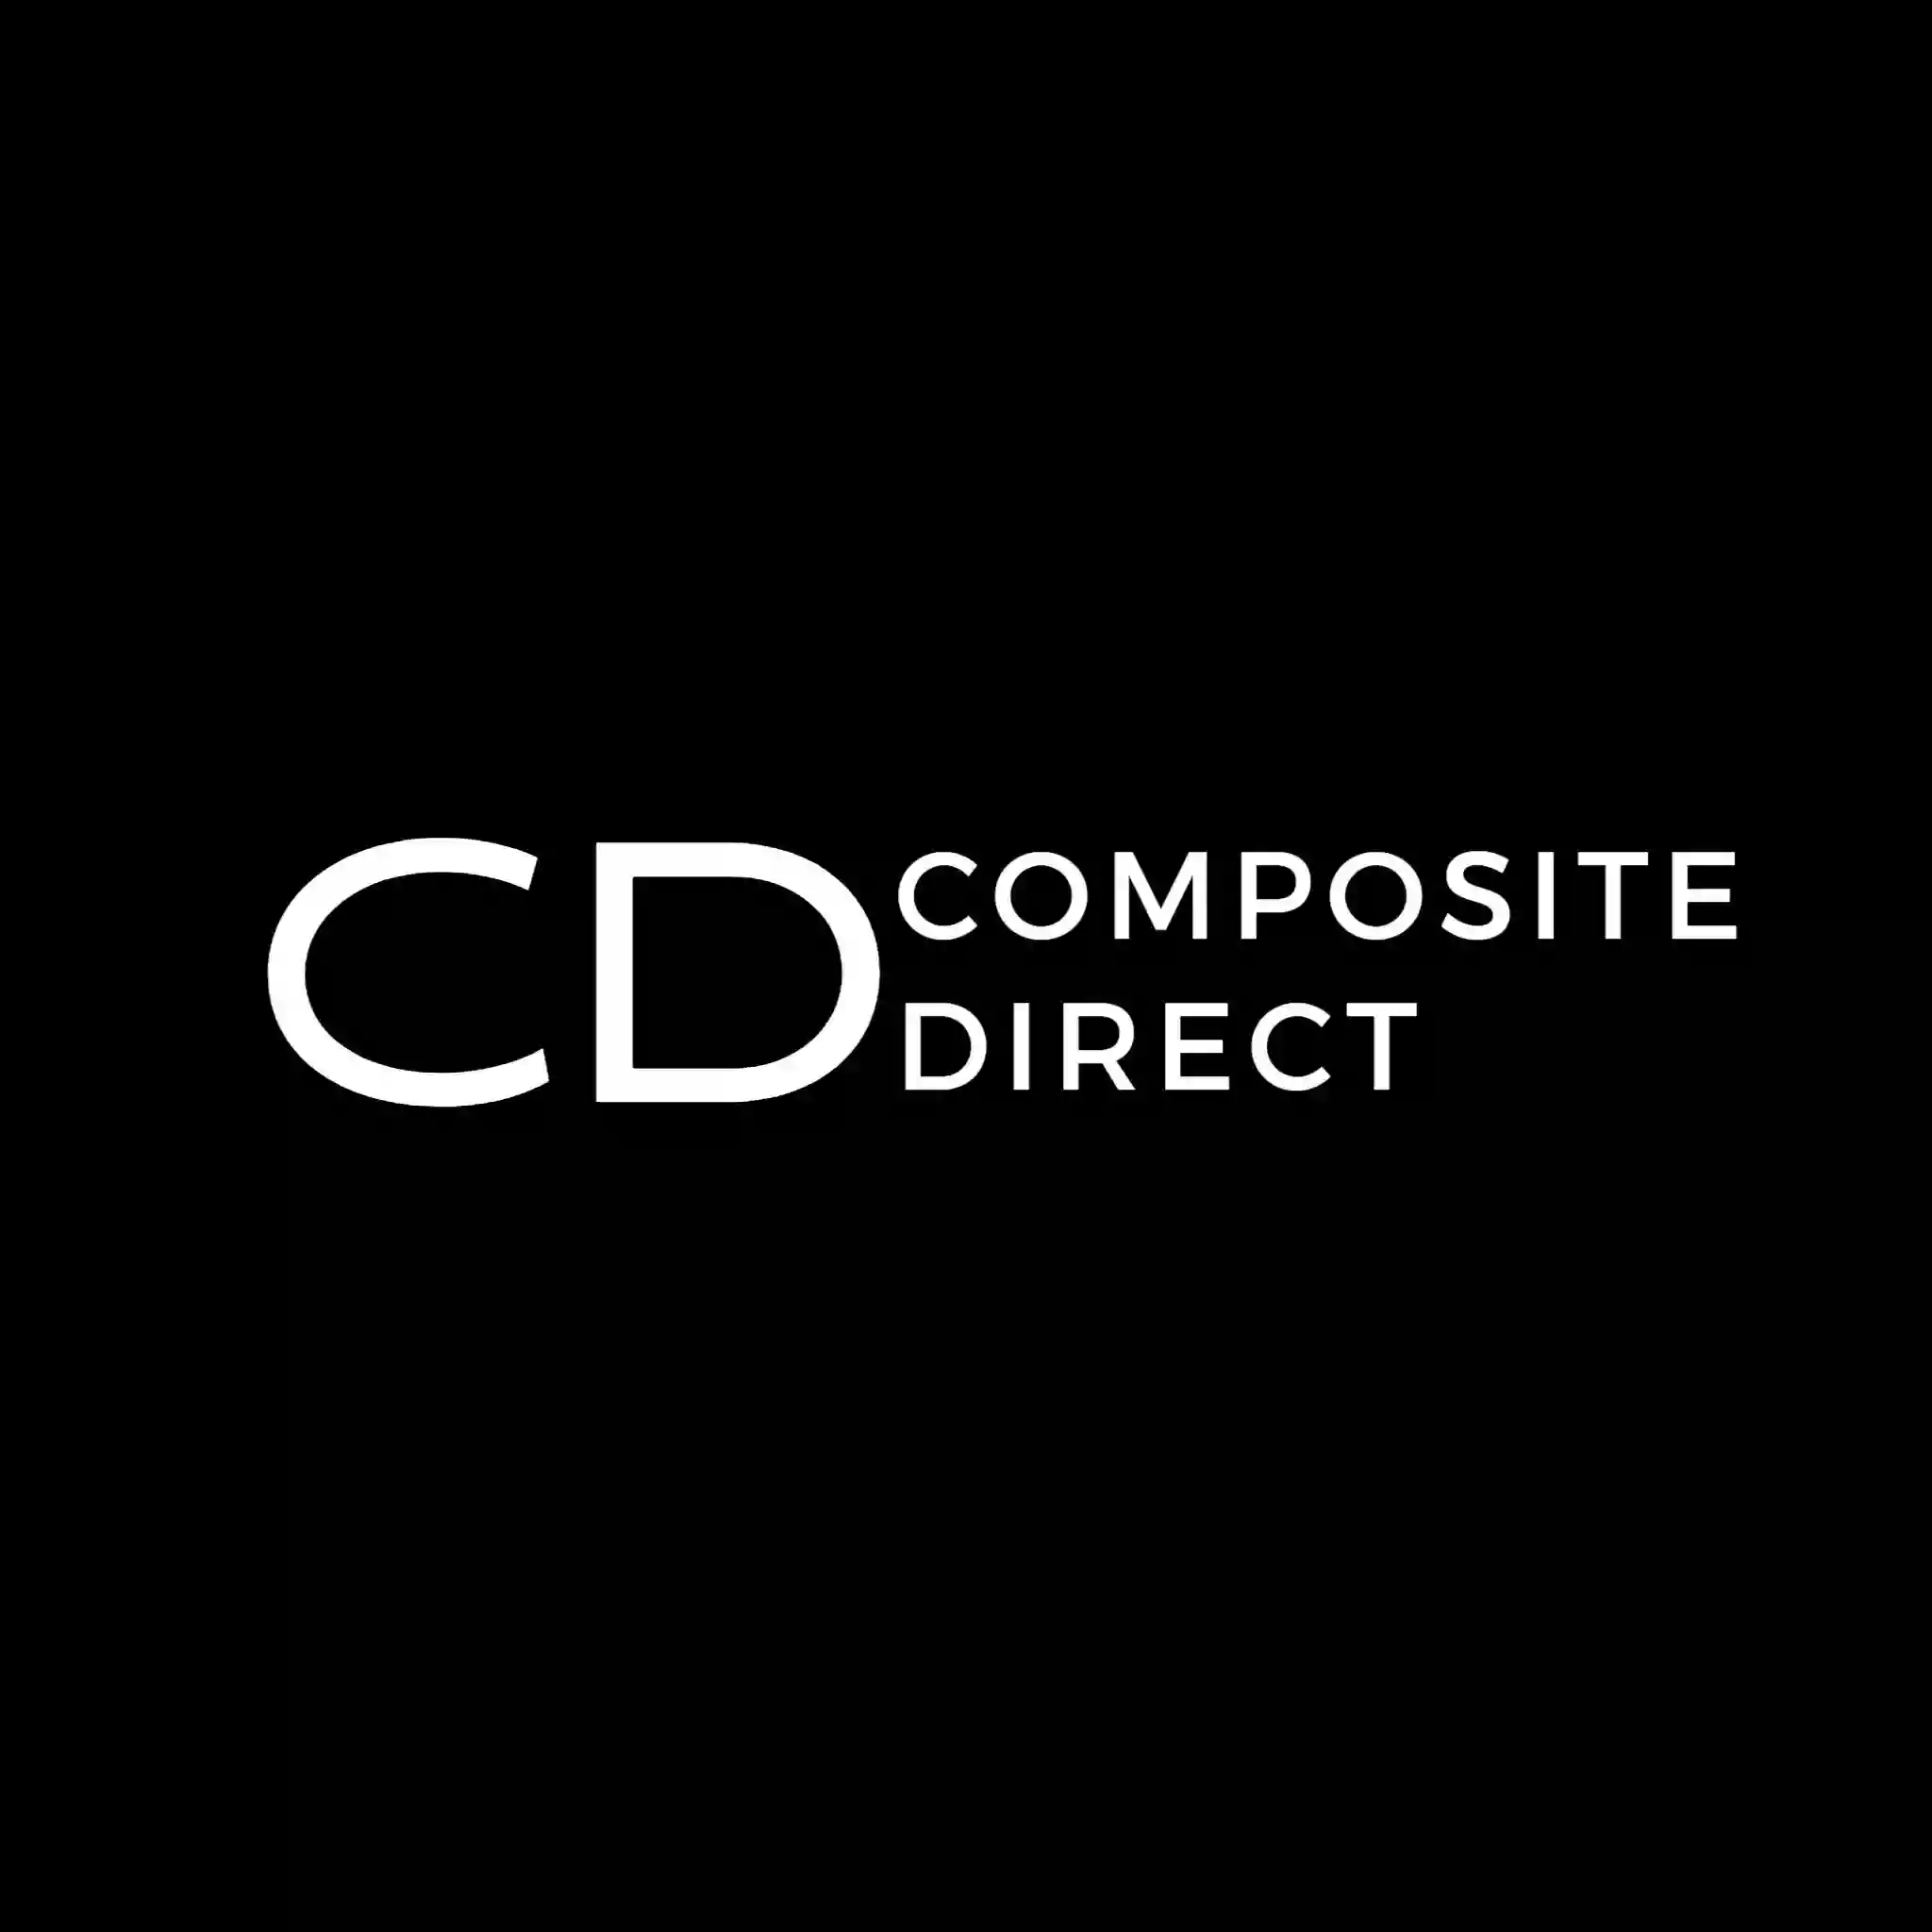 Composite Direct